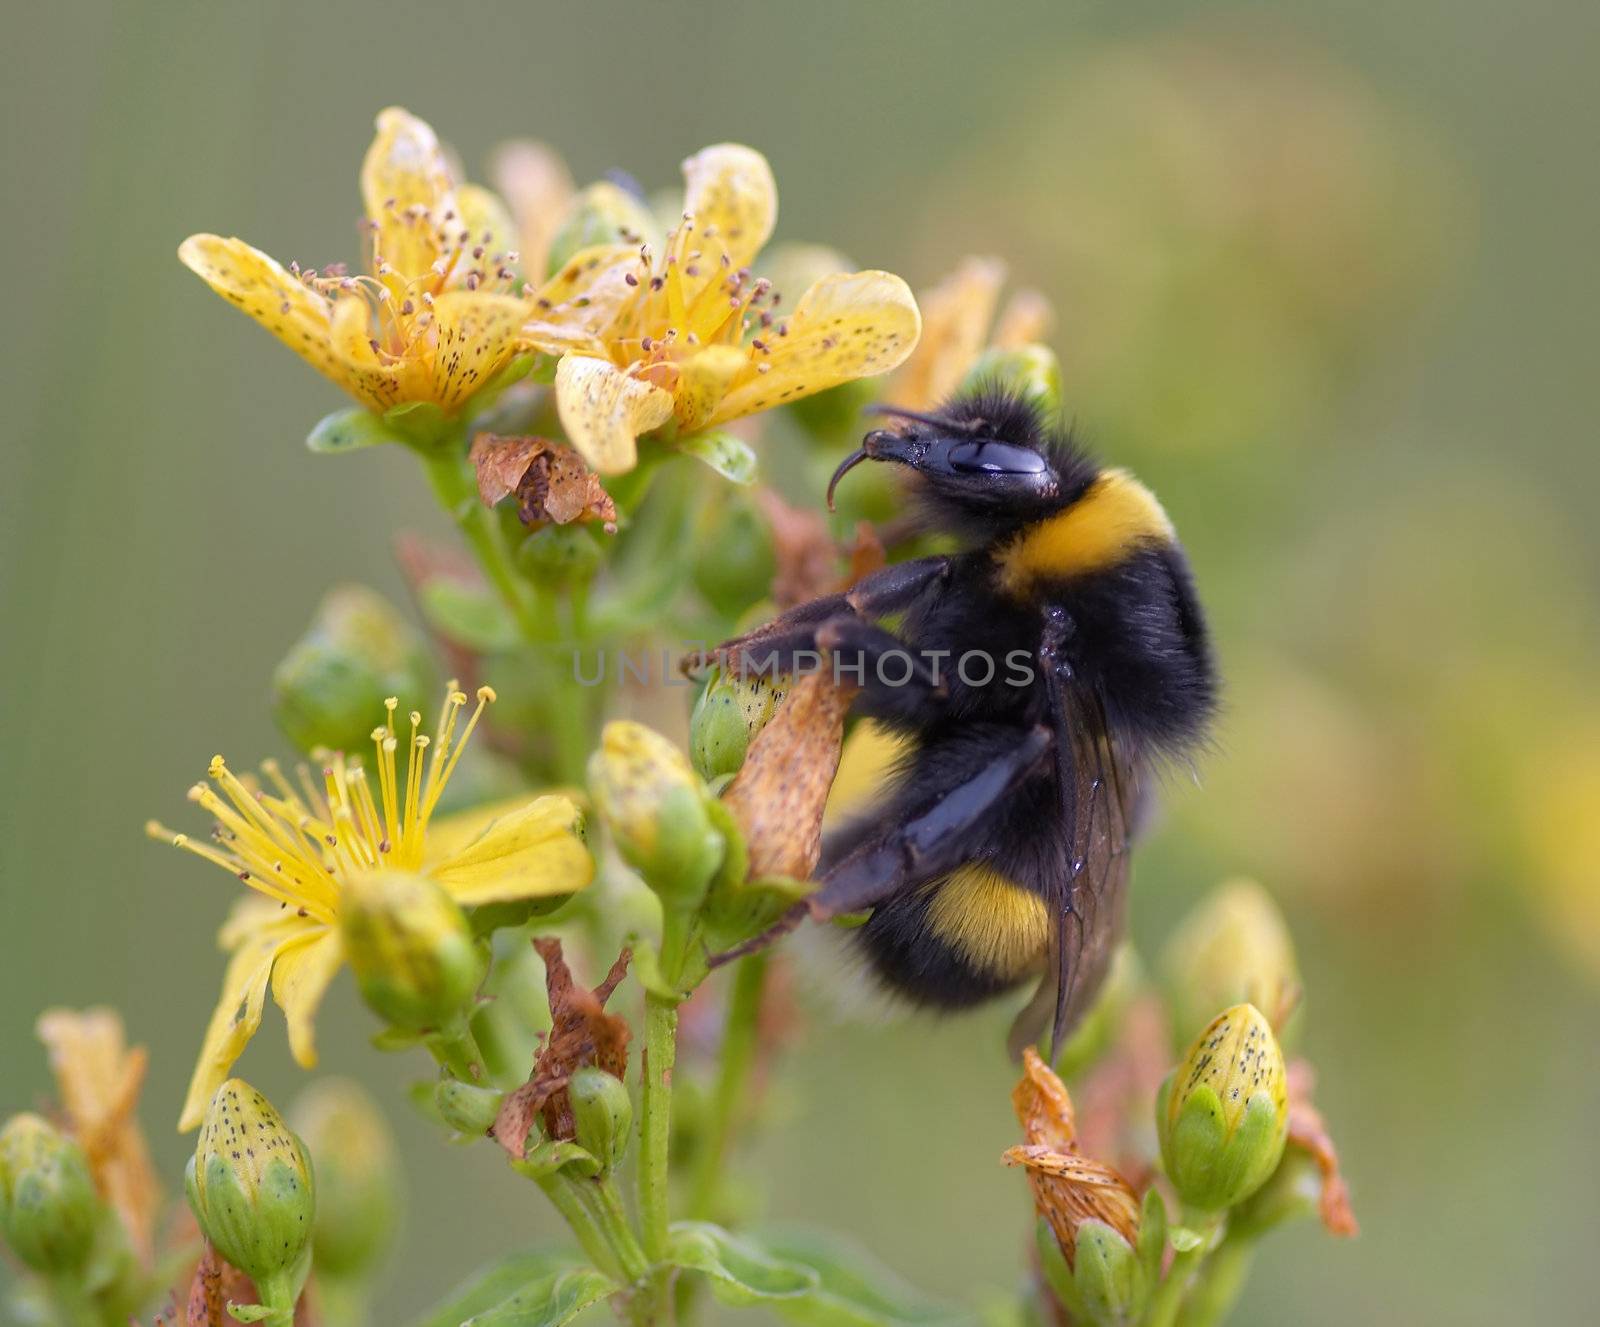 Macro (close-up) of the bumblebee